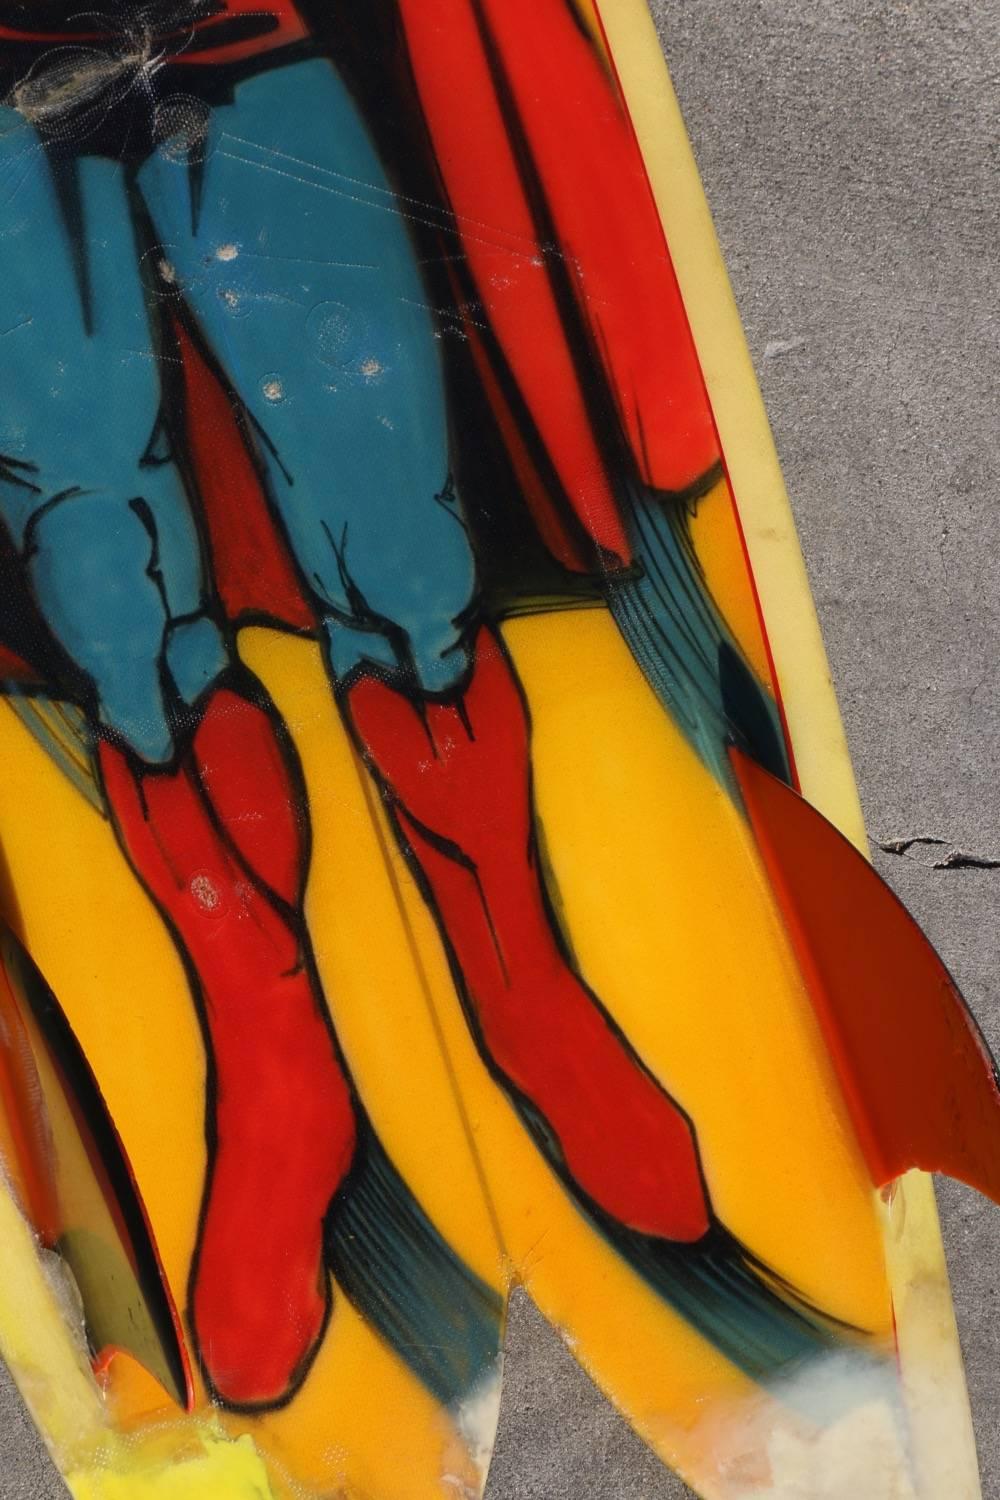 Fiberglass All Original 1970s Superman Pocket Rocket Surfboard